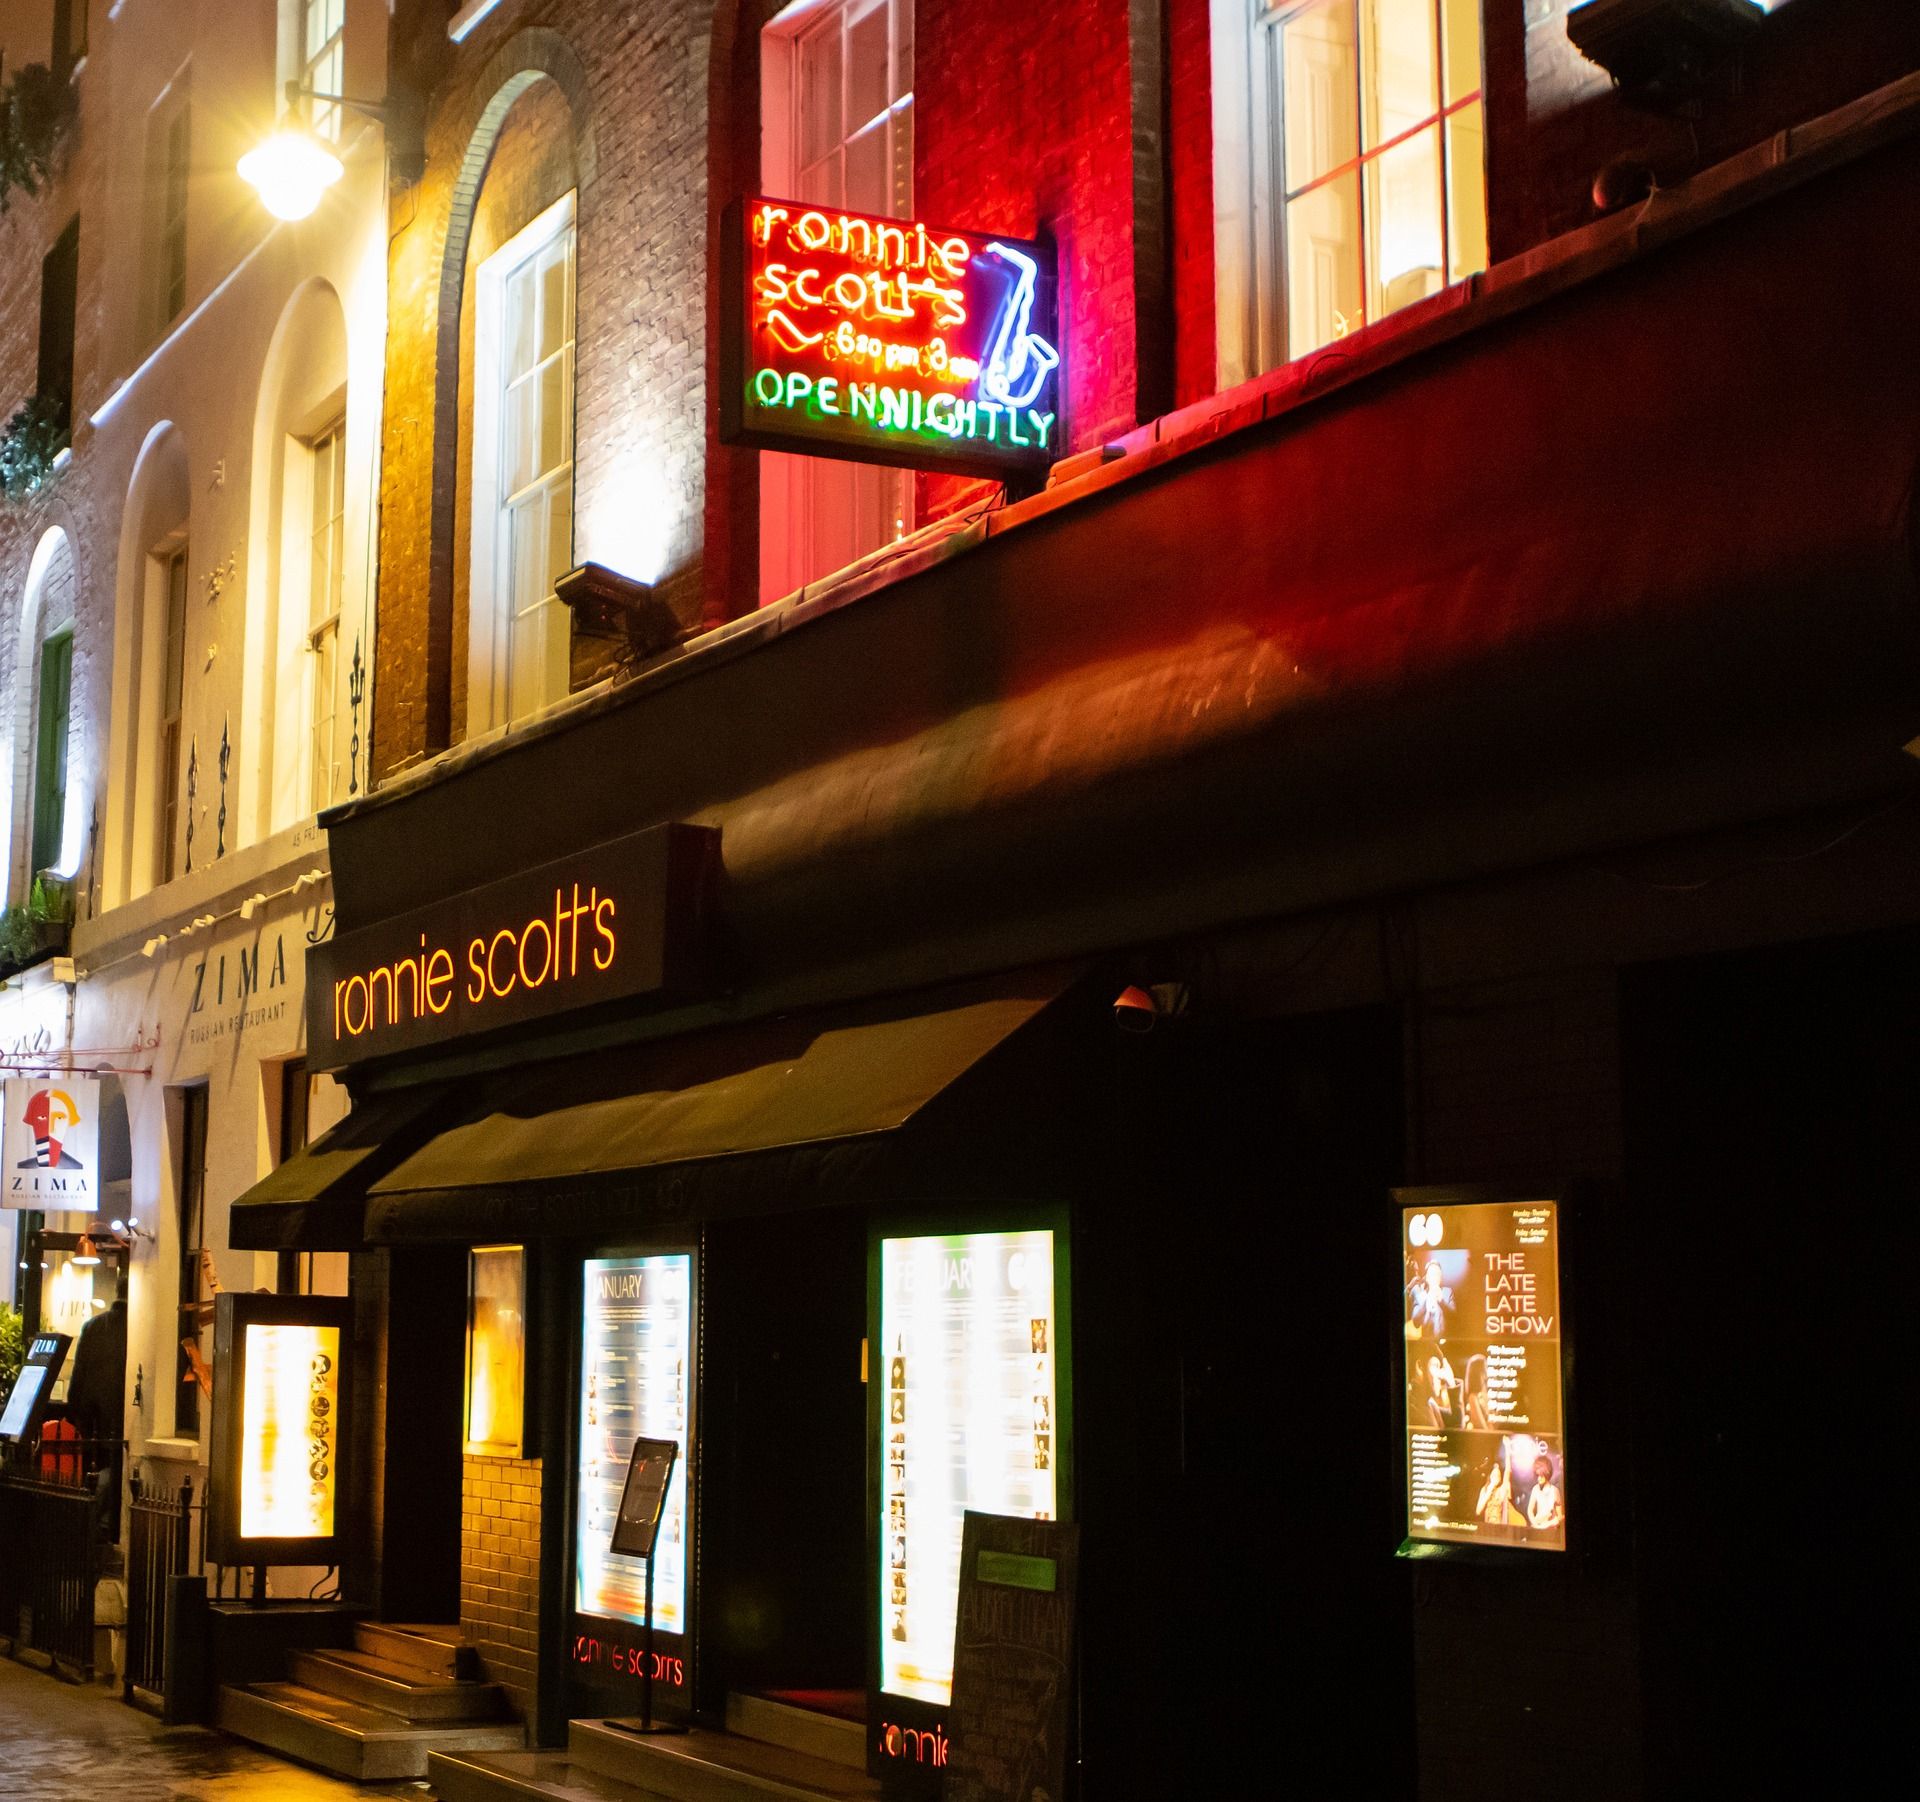 Soho London's famous jazz club